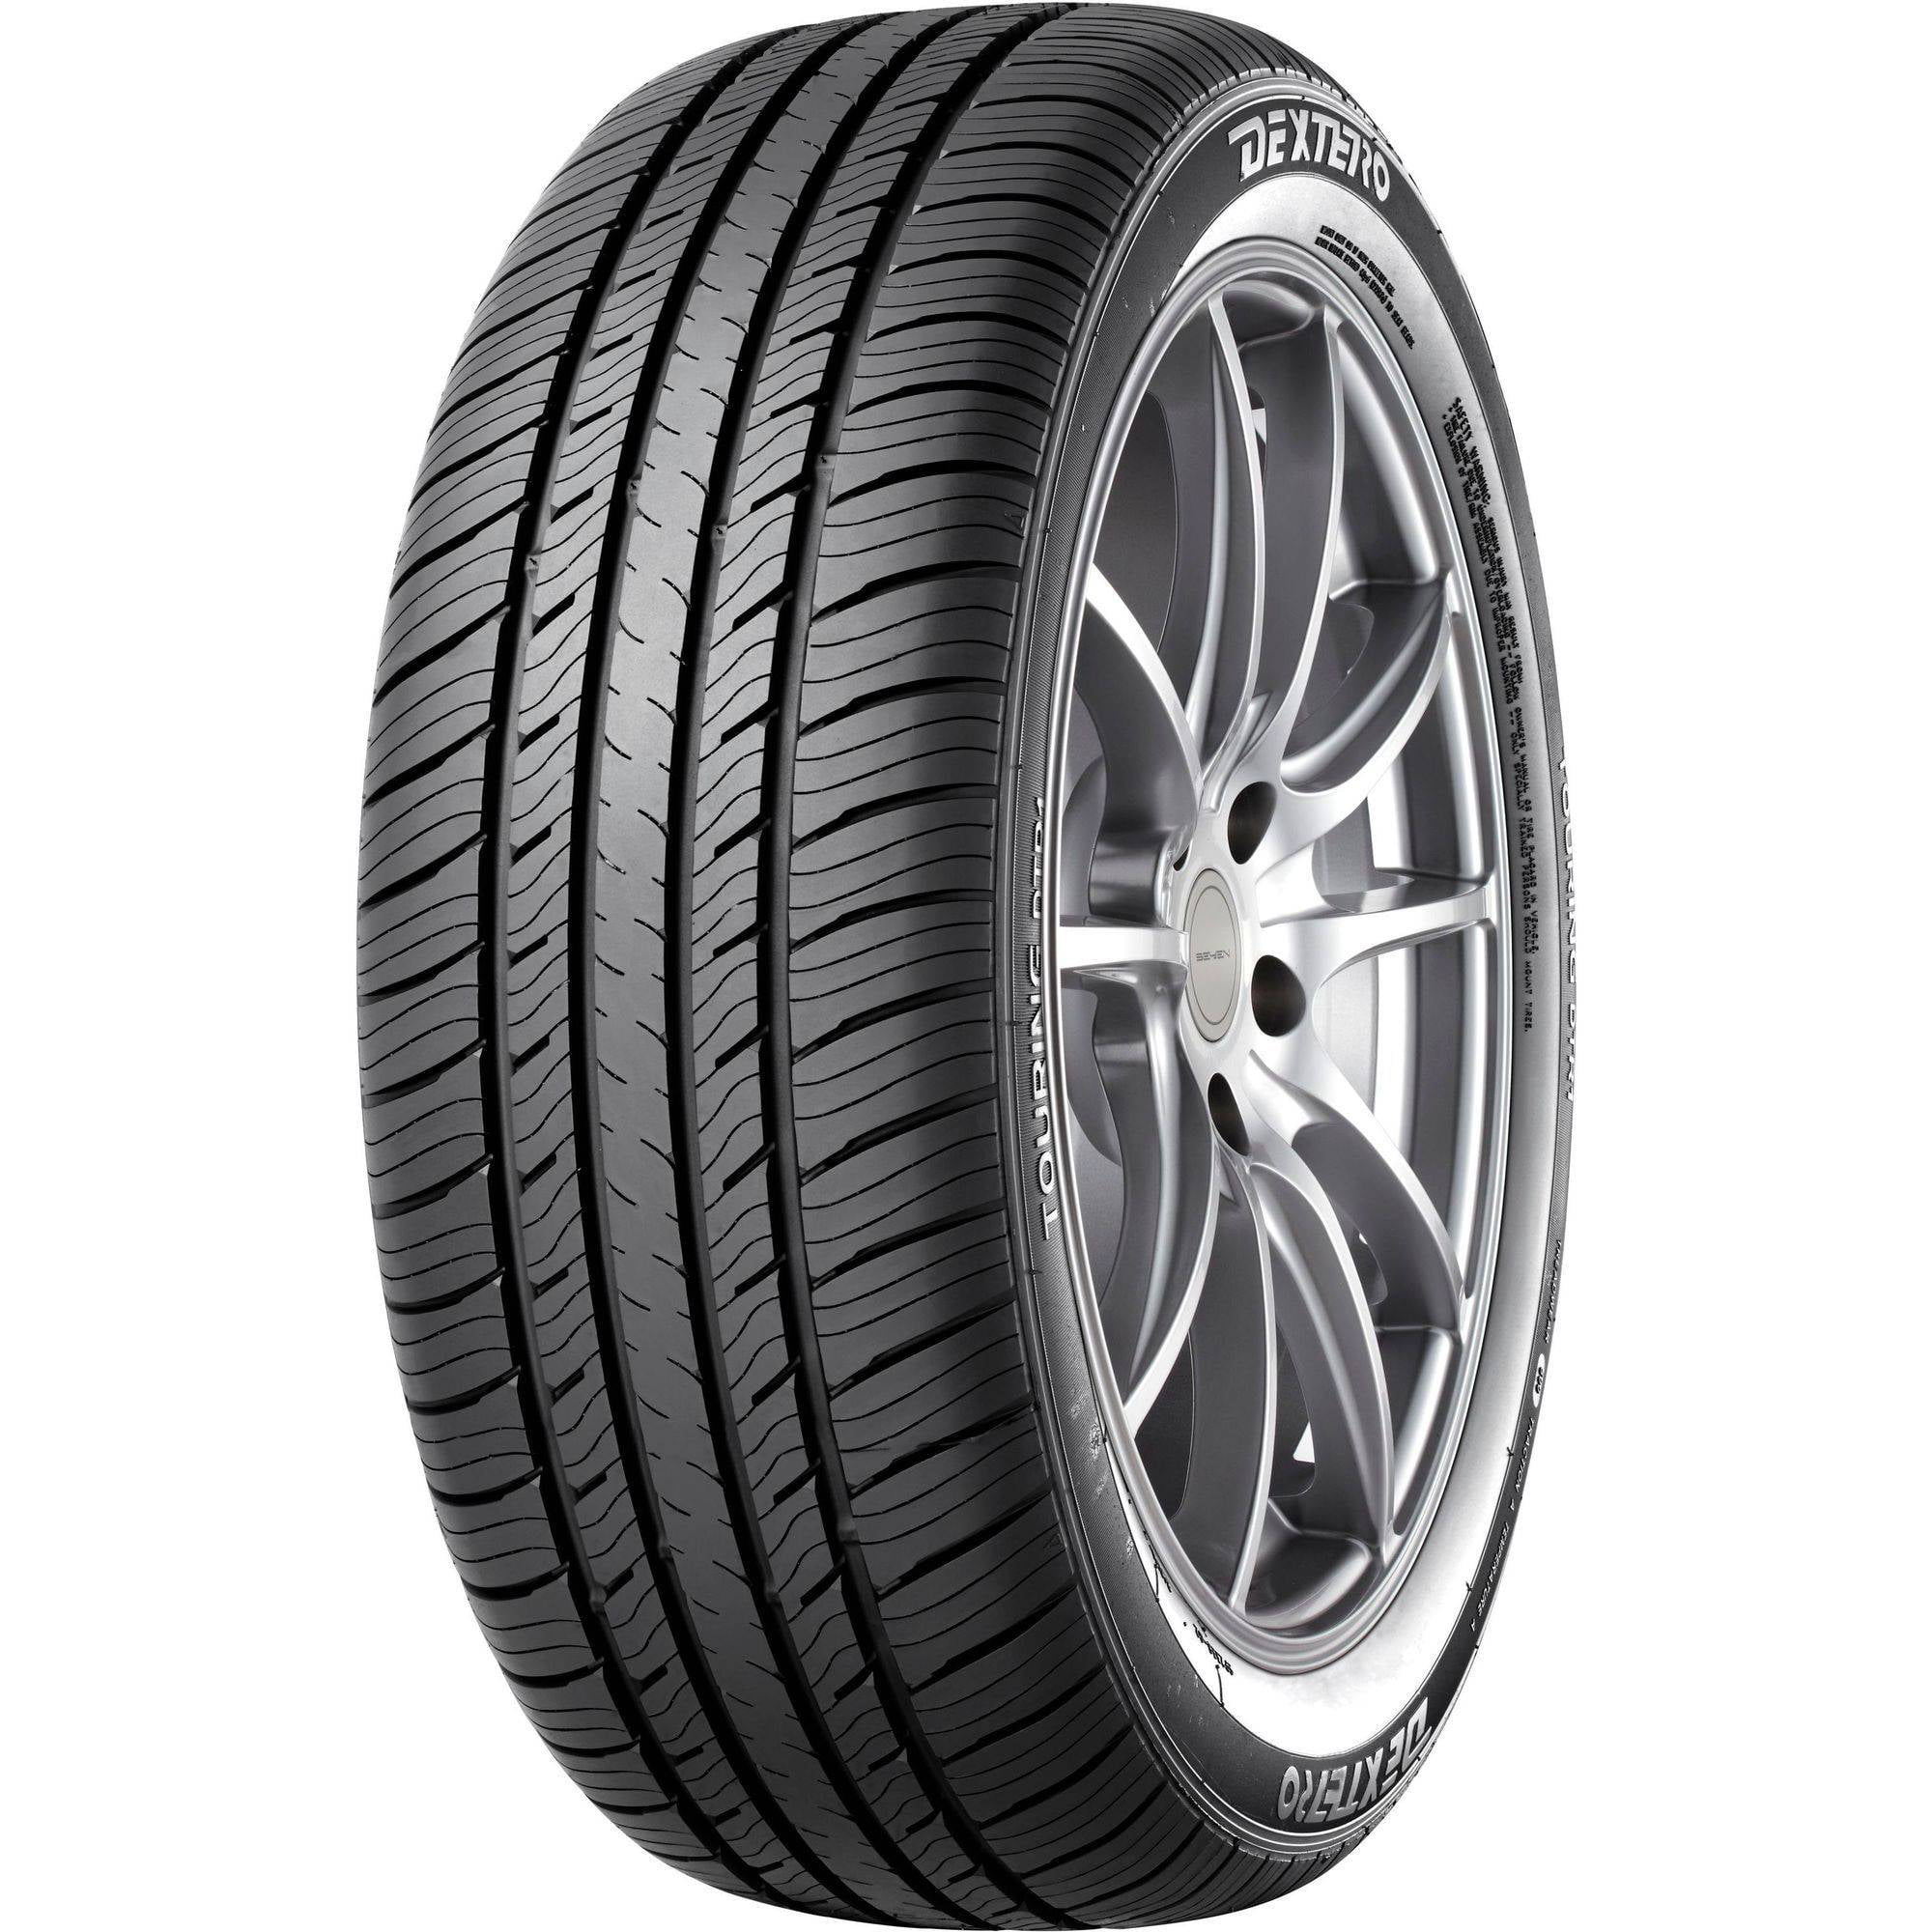 Hankook Kinergy GT H436 All-Season Tire - 195/65R15 91H - Walmart.com